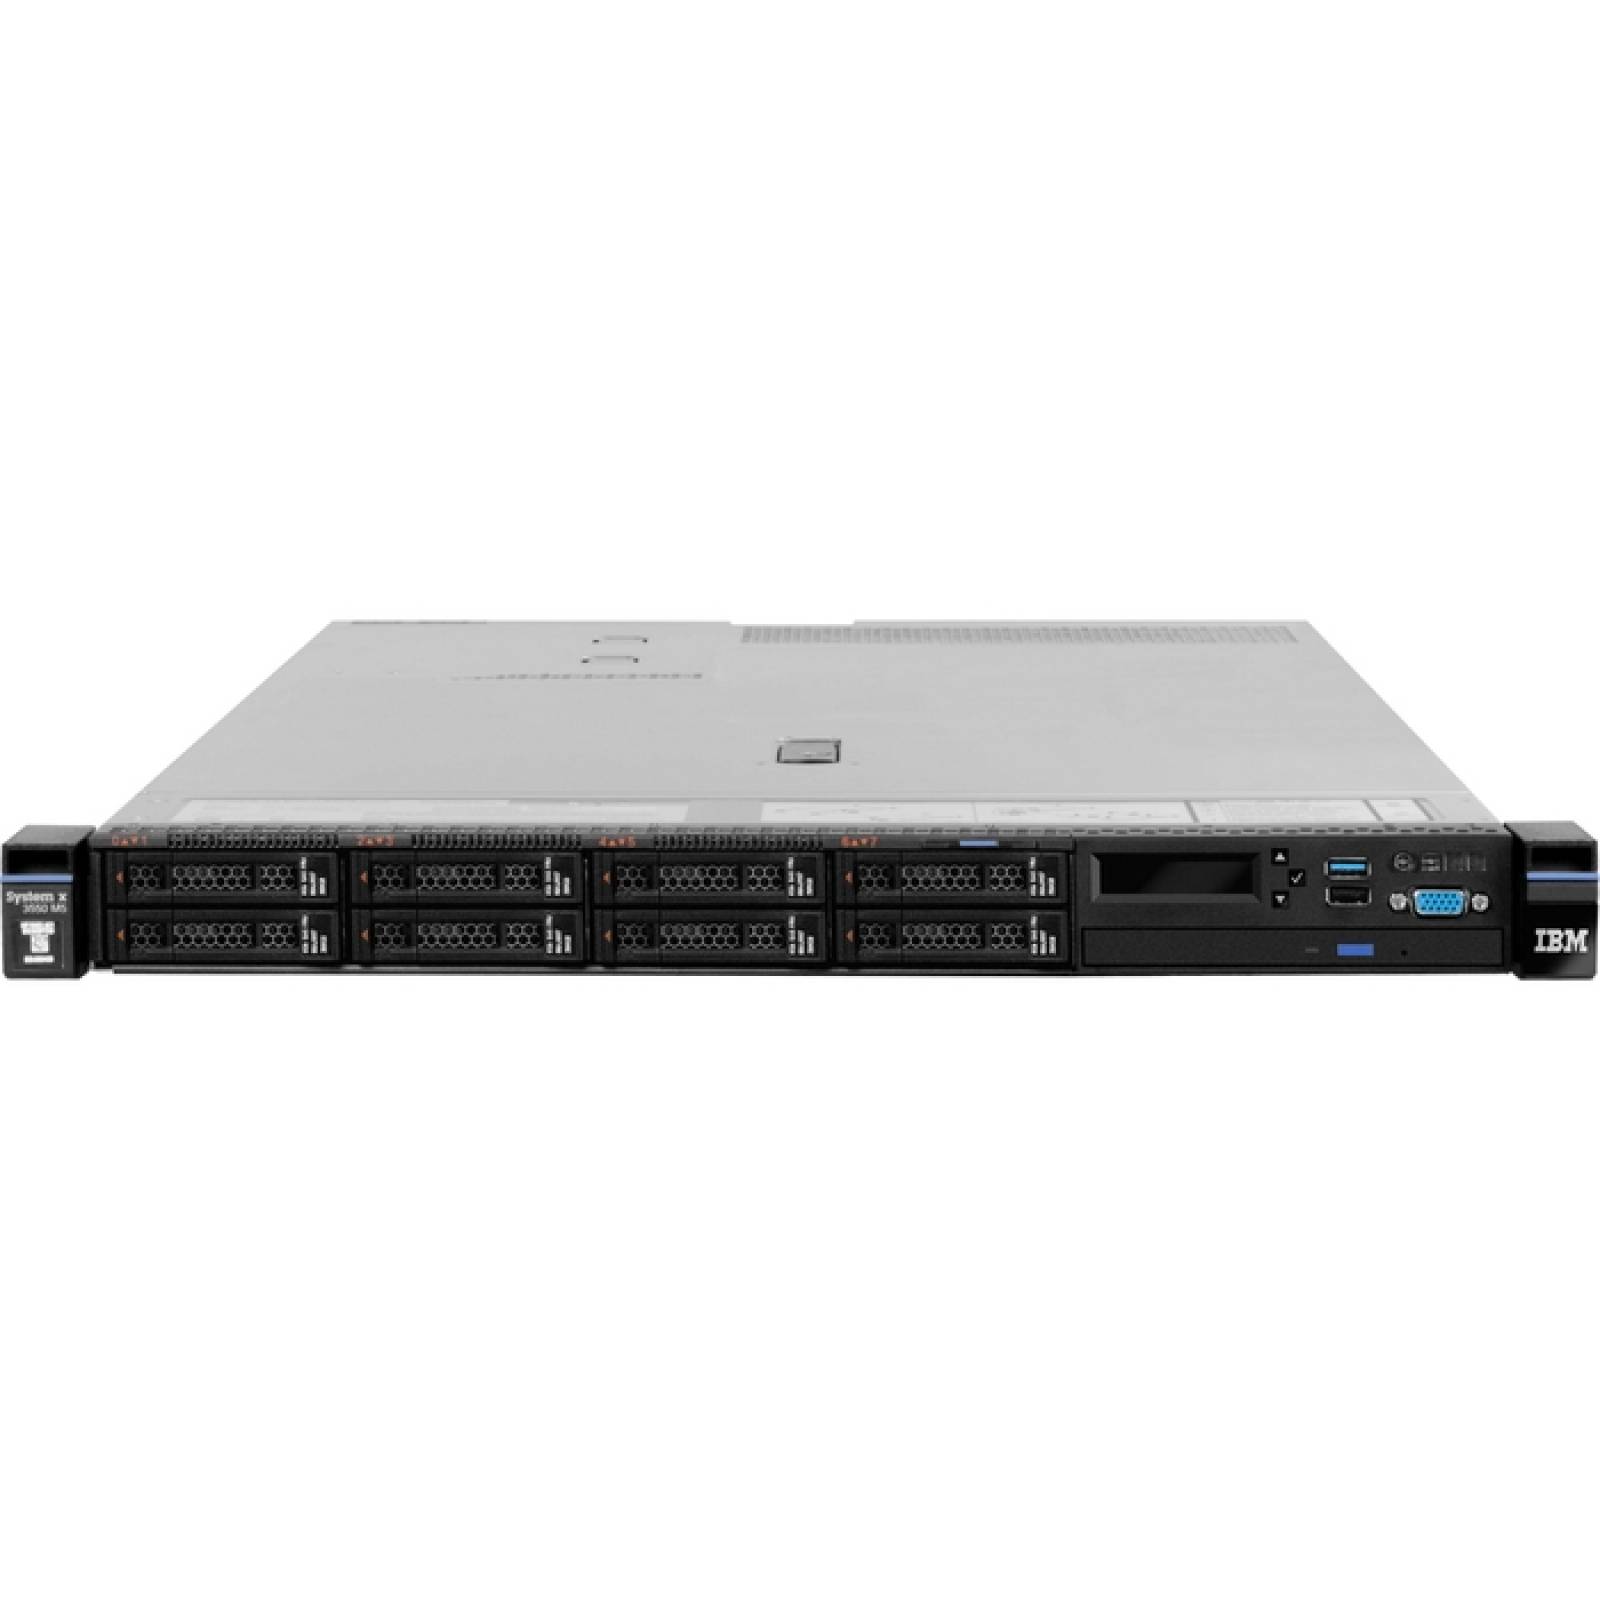 Lenovo System x x3550 M5 8869KEU 1U Rack Server  1 x Intel Xeon E52620 v4 Octacore (8 Core) 210 GHz  16 GB instalad